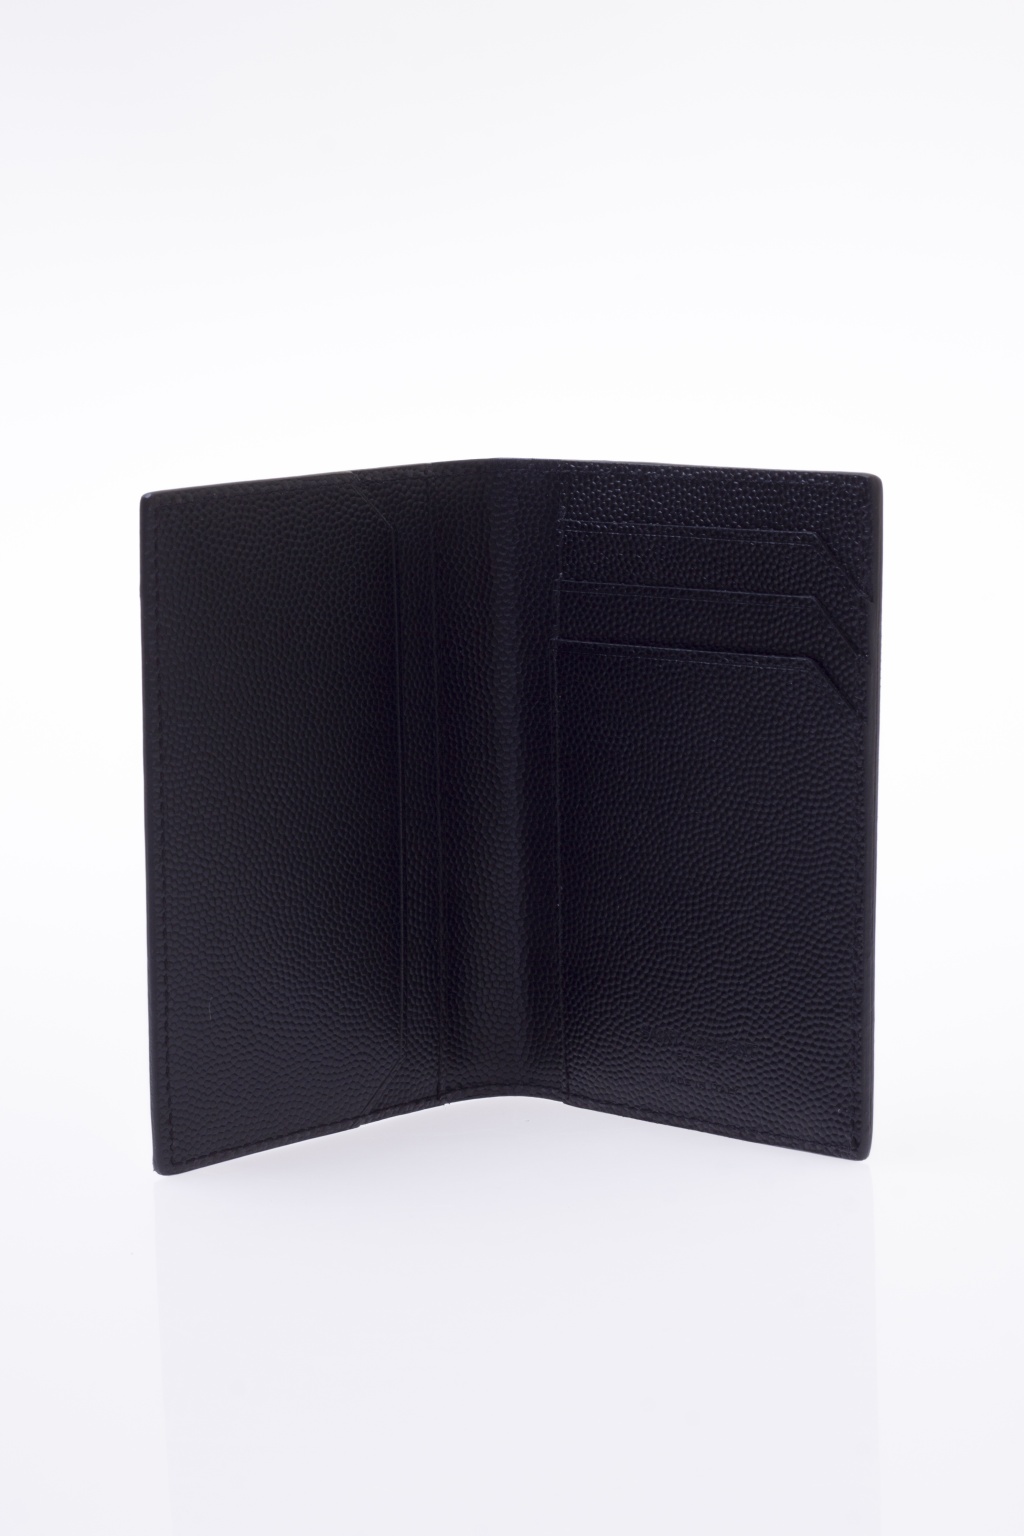 Black Credit Card Case Saint Laurent - Vitkac GB